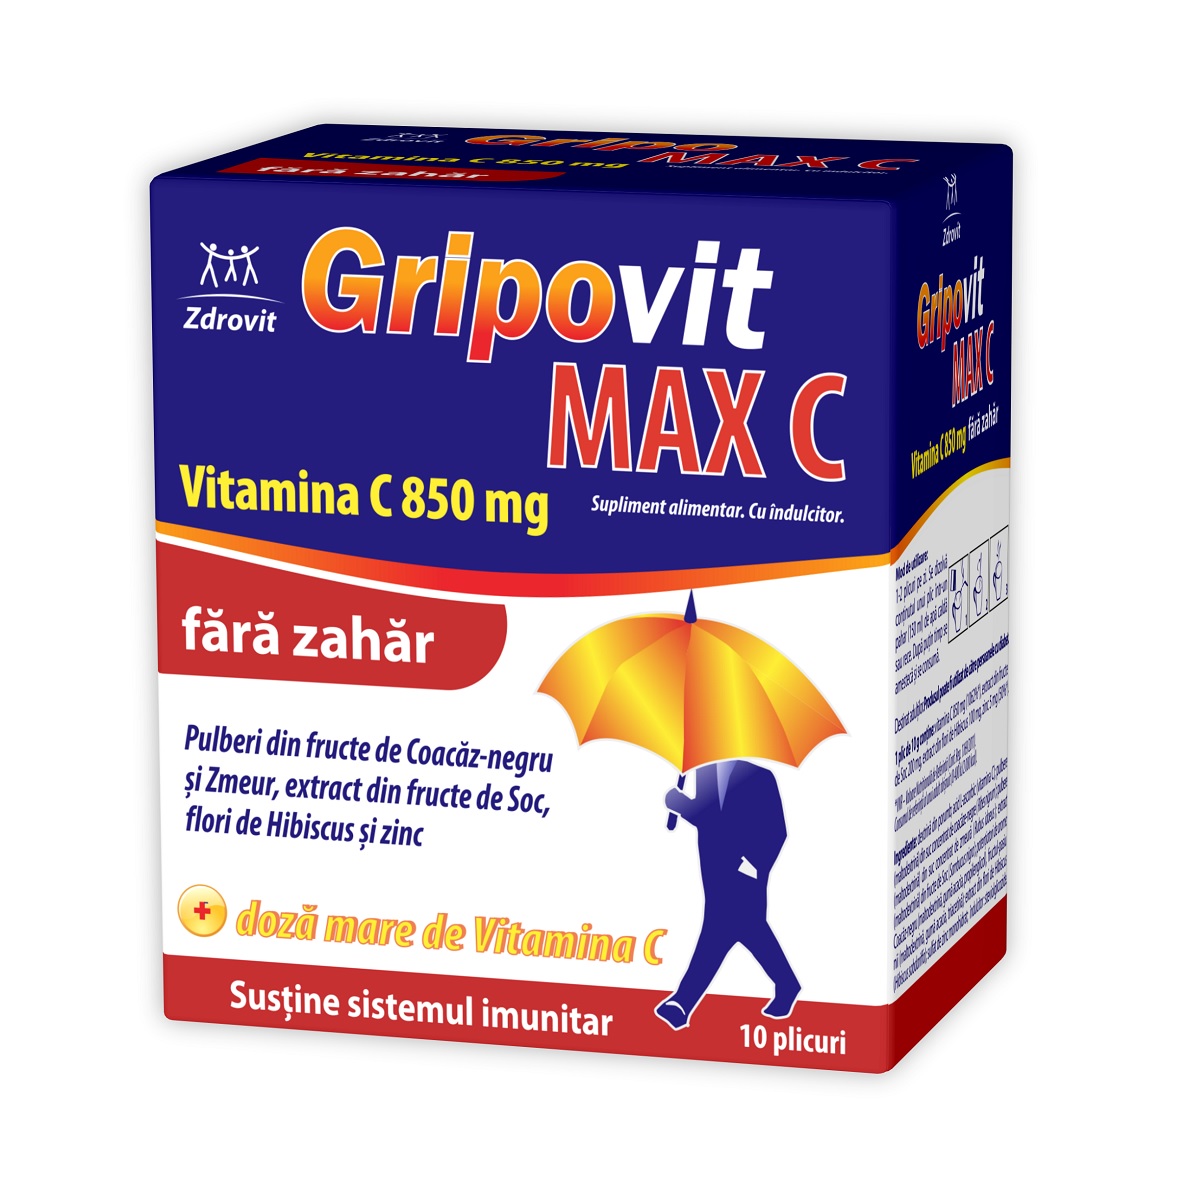 Imunitate - Gripovit Max C fara zahar, 10 plicuri, Zdrovit, nordpharm.ro